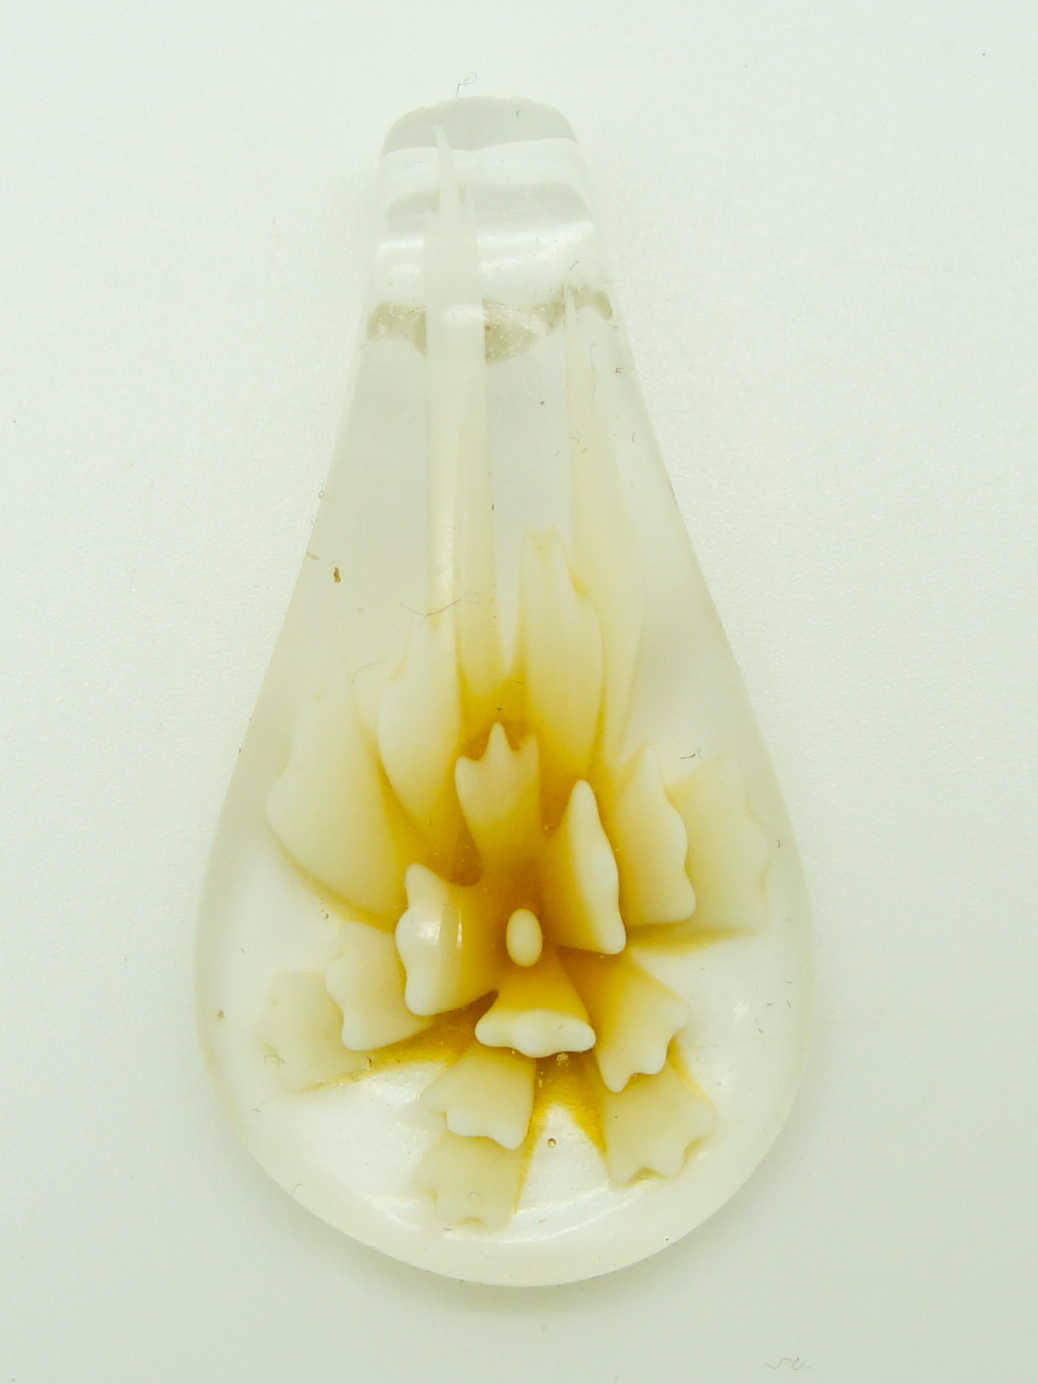 Pend-378-3 pendentif transparent fleur jaune lampwork